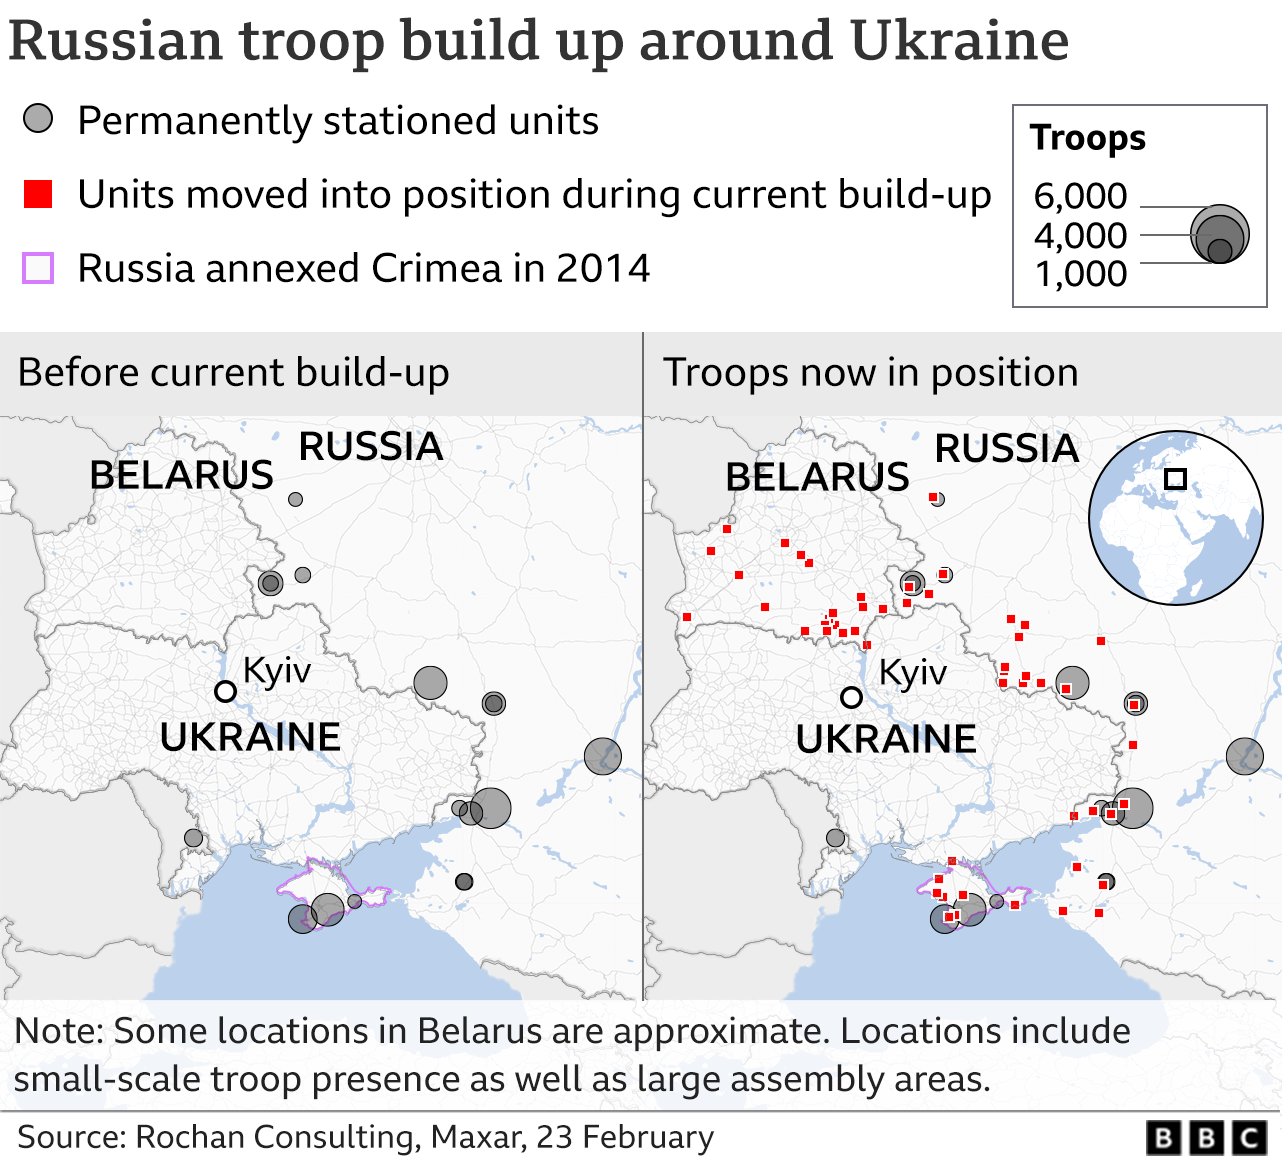 BBC graphic showing Russian troop build up around Ukraine